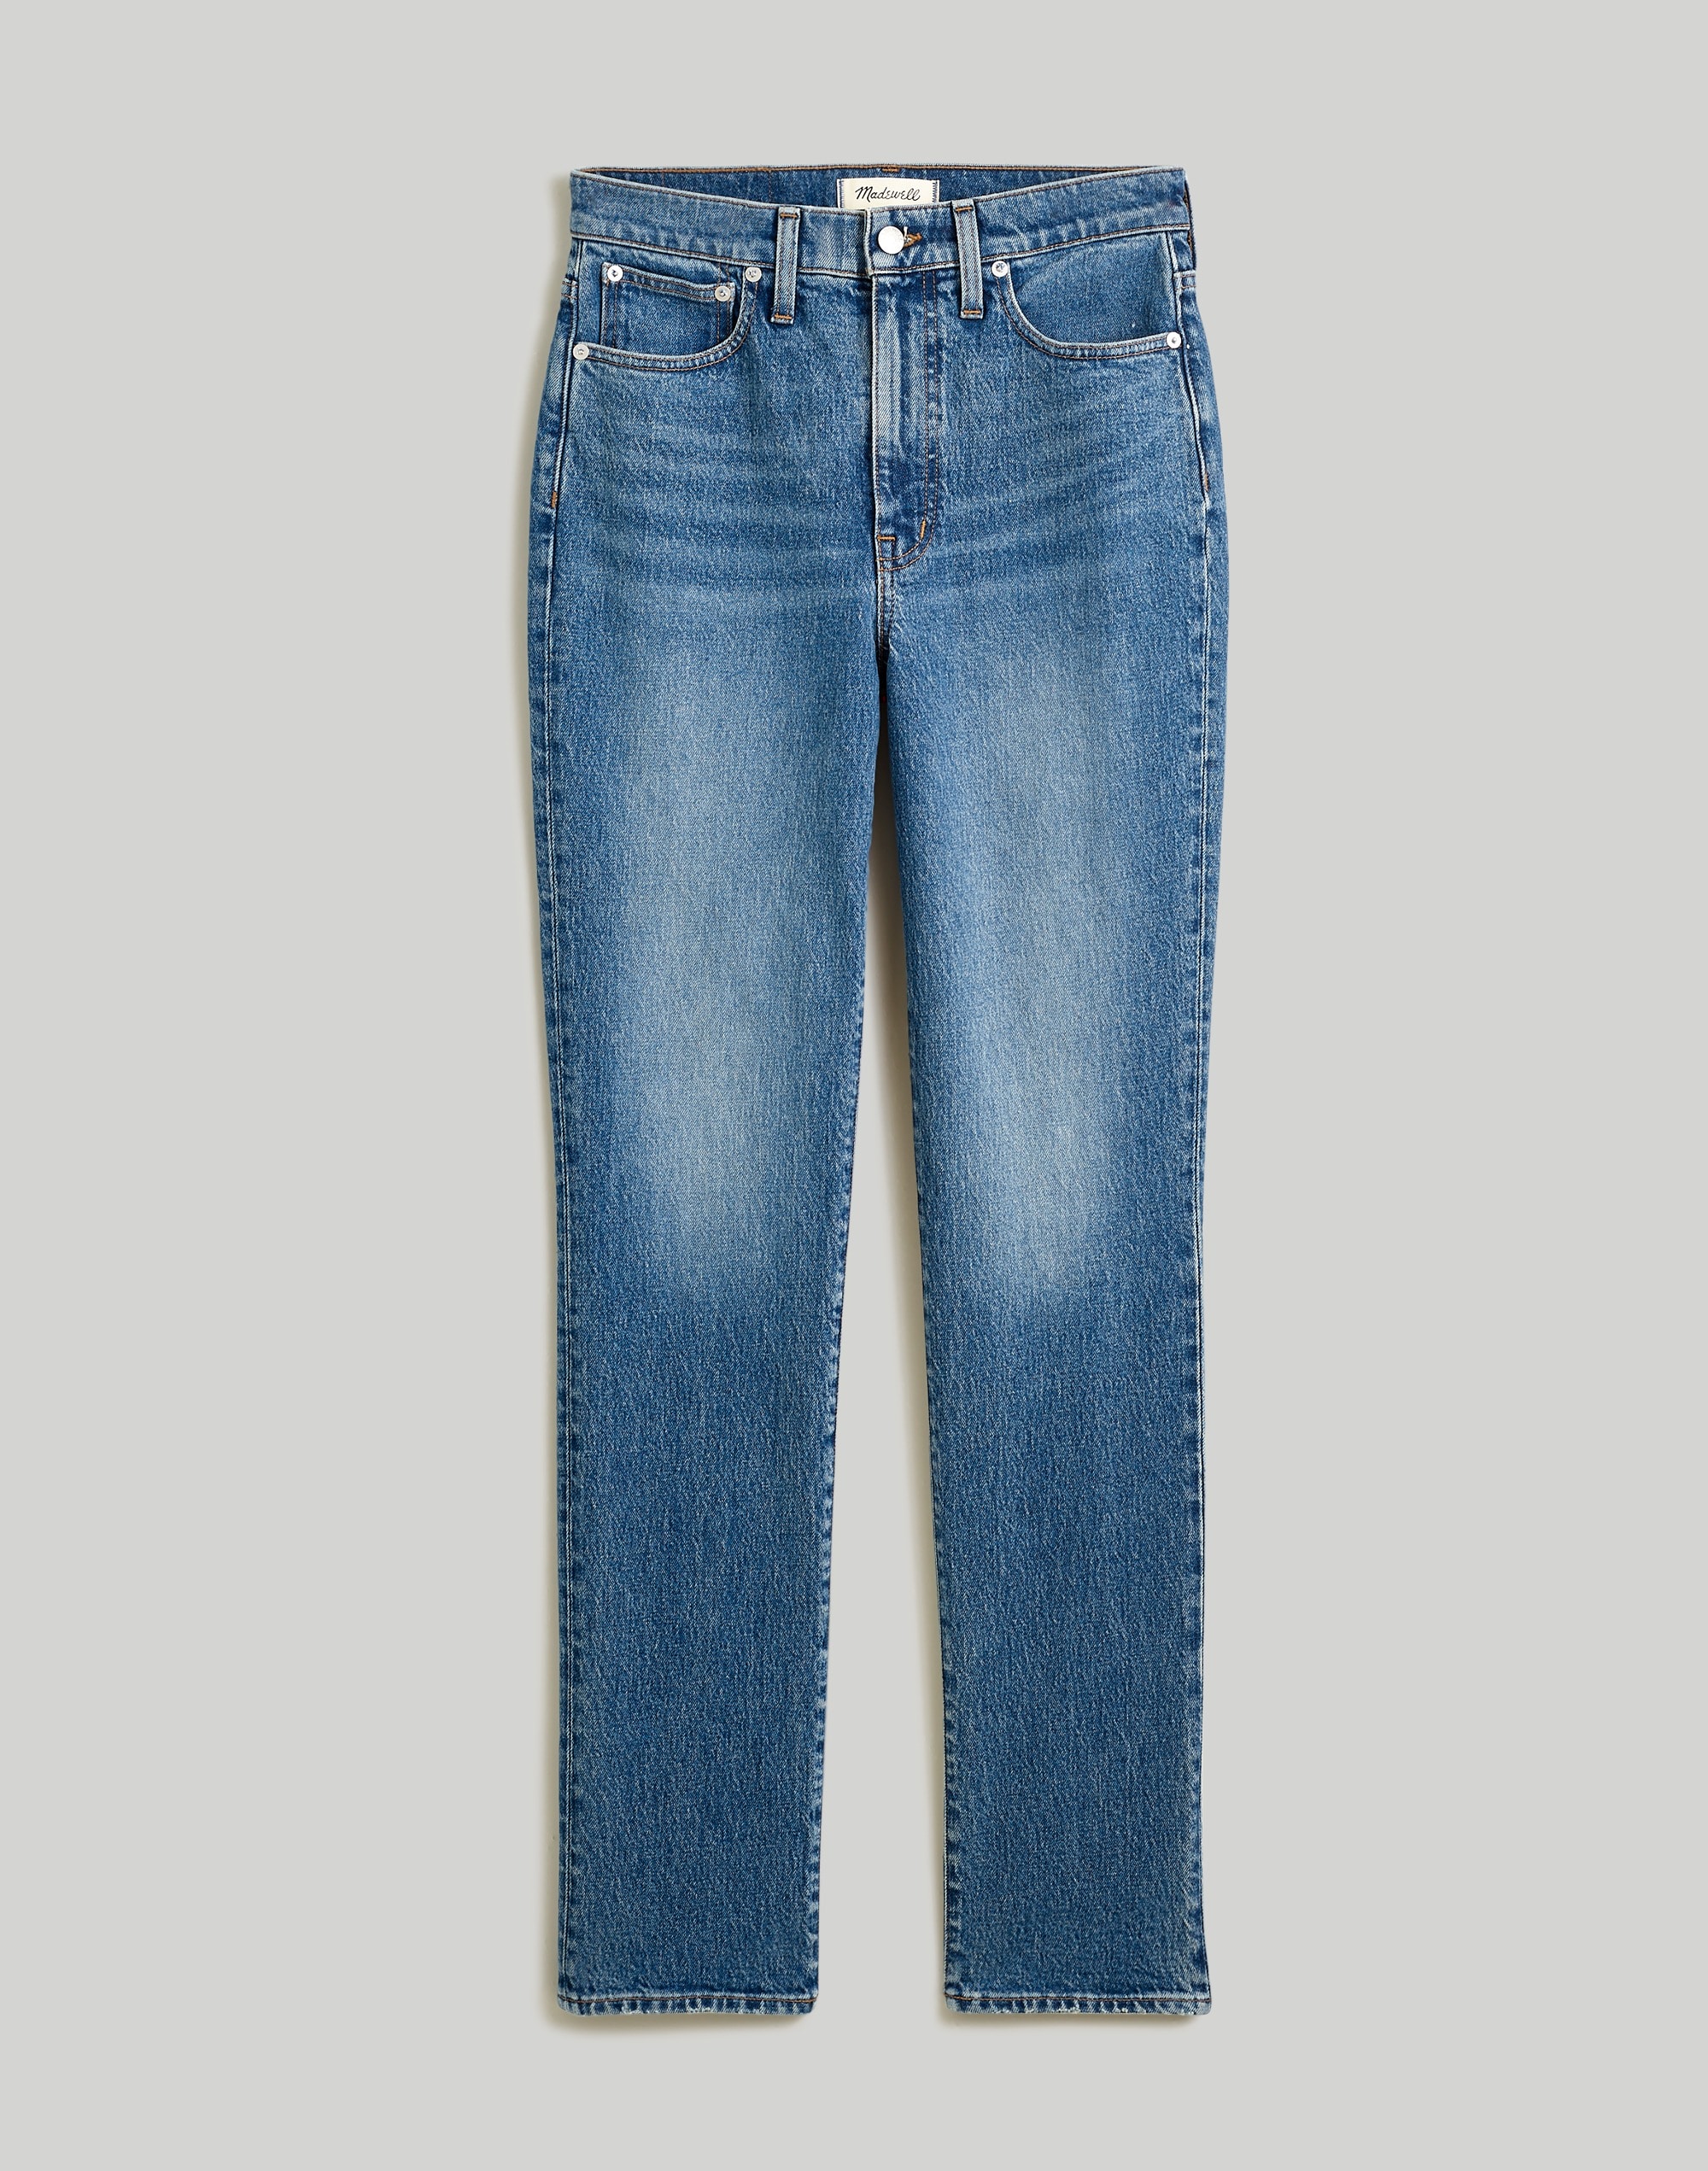 The Petite Curvy Perfect Vintage Jean